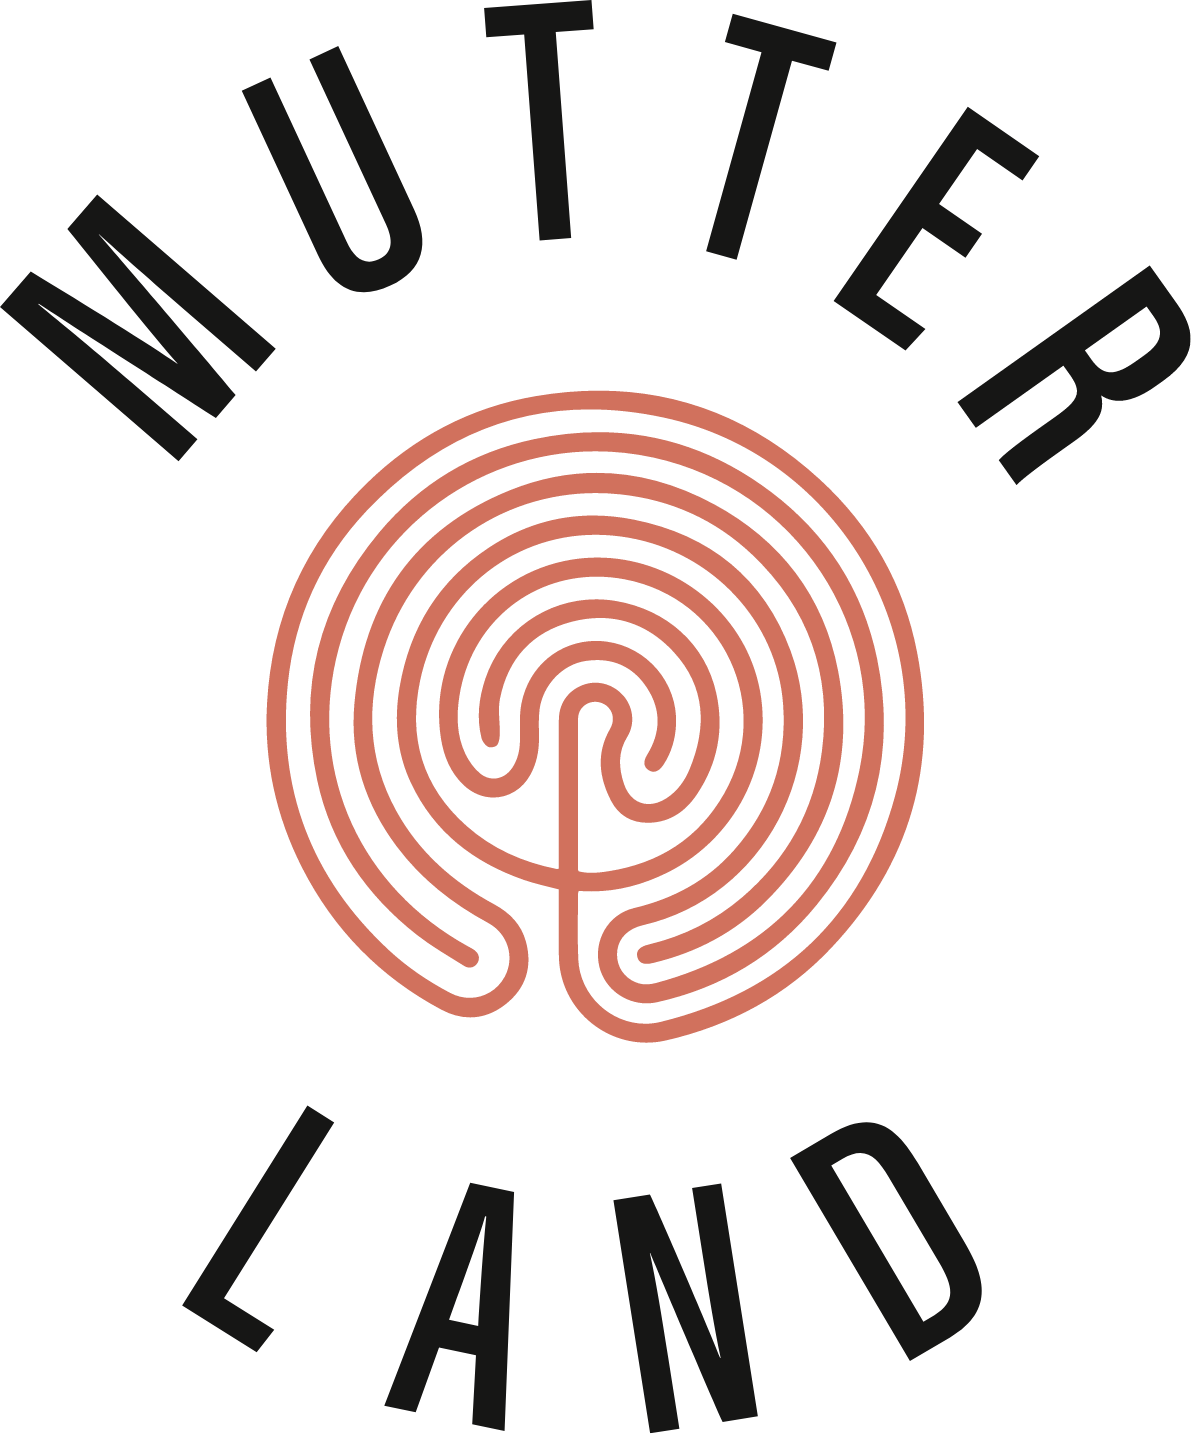 image-11683550-logo-mutterland-rgb-6512b.png